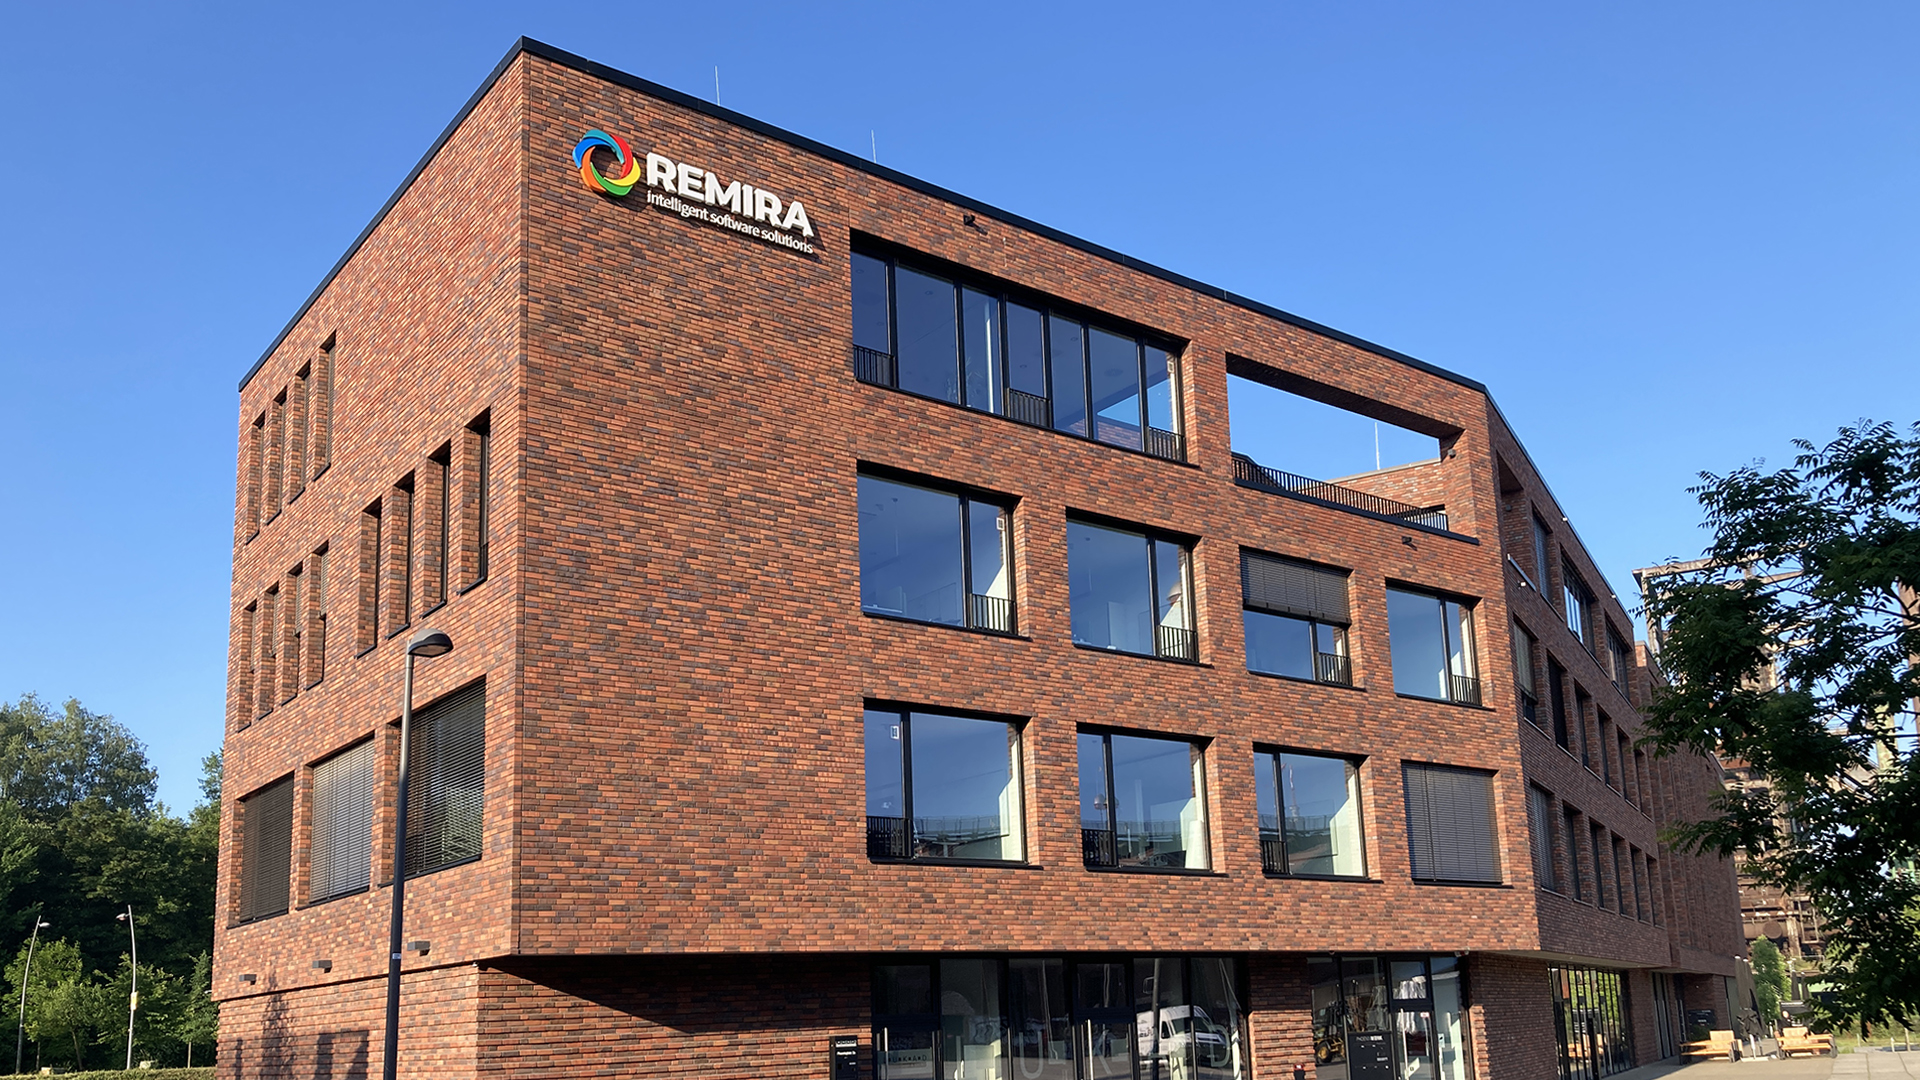 The REMIRA main site in Dortmund, Germany